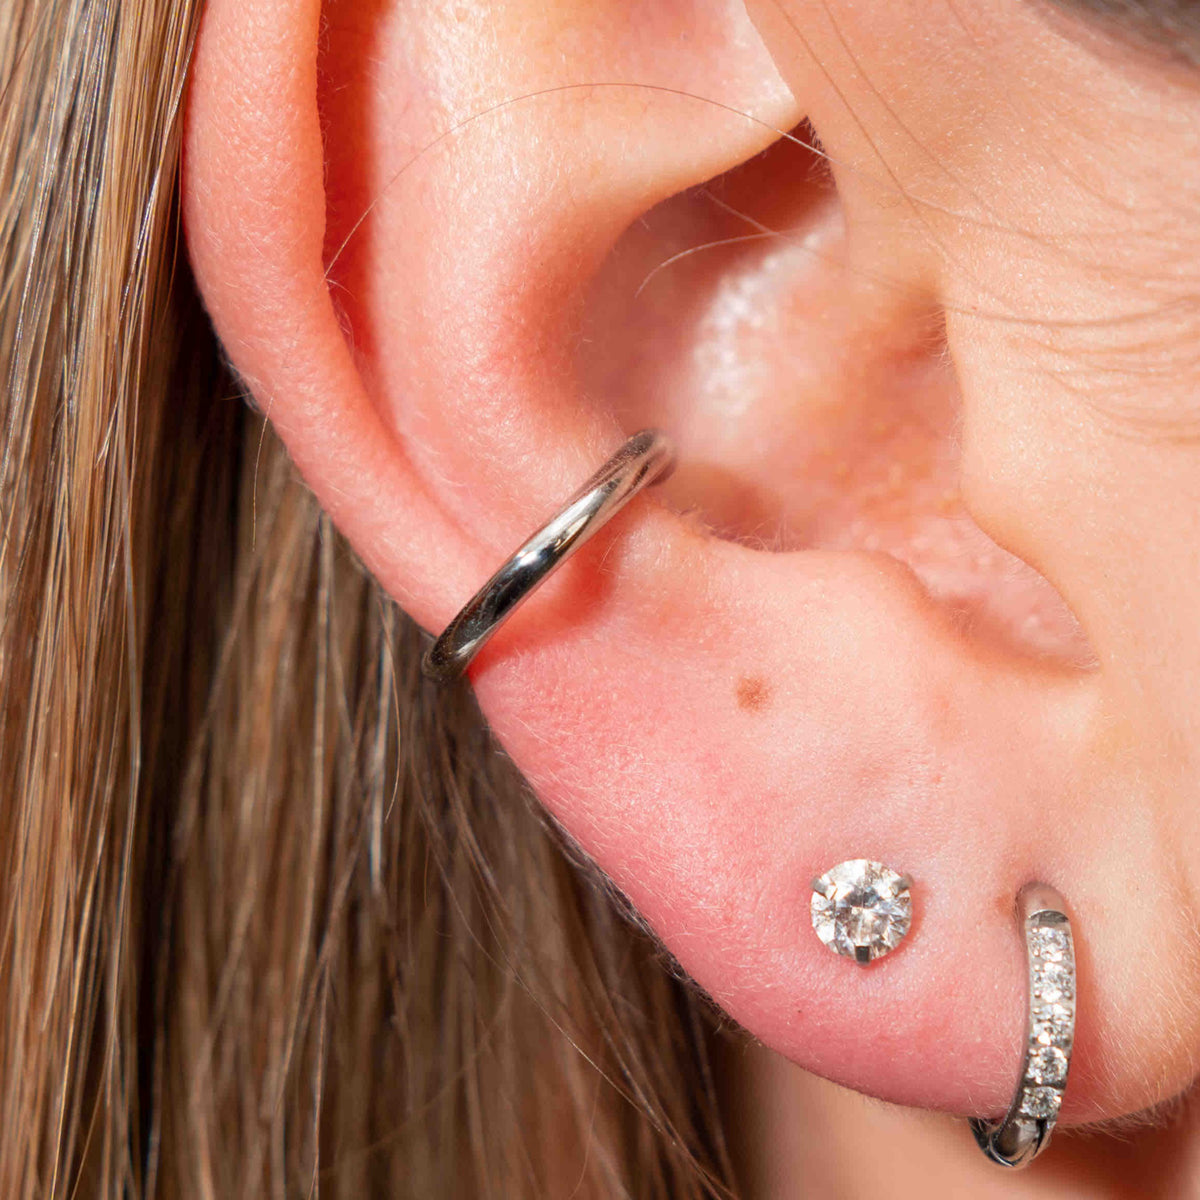 Fake conch piercing: Charlotte